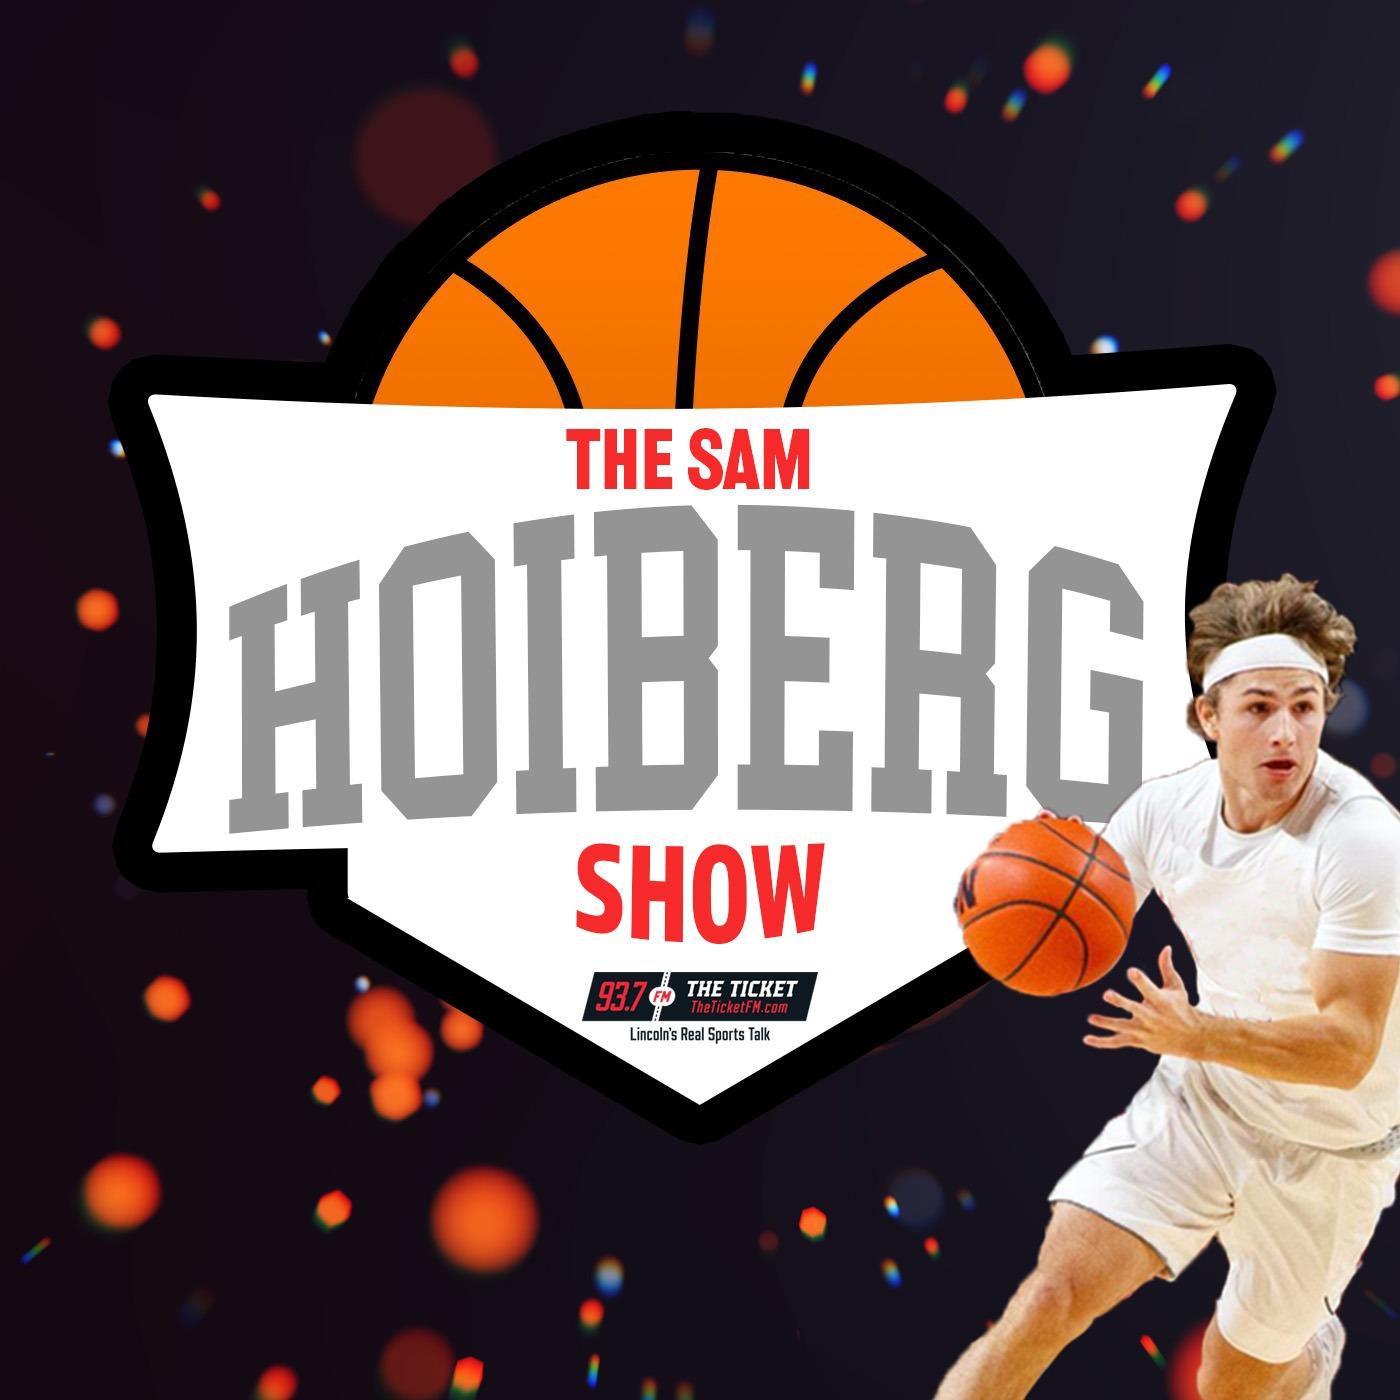 The Sam Hoiberg Show